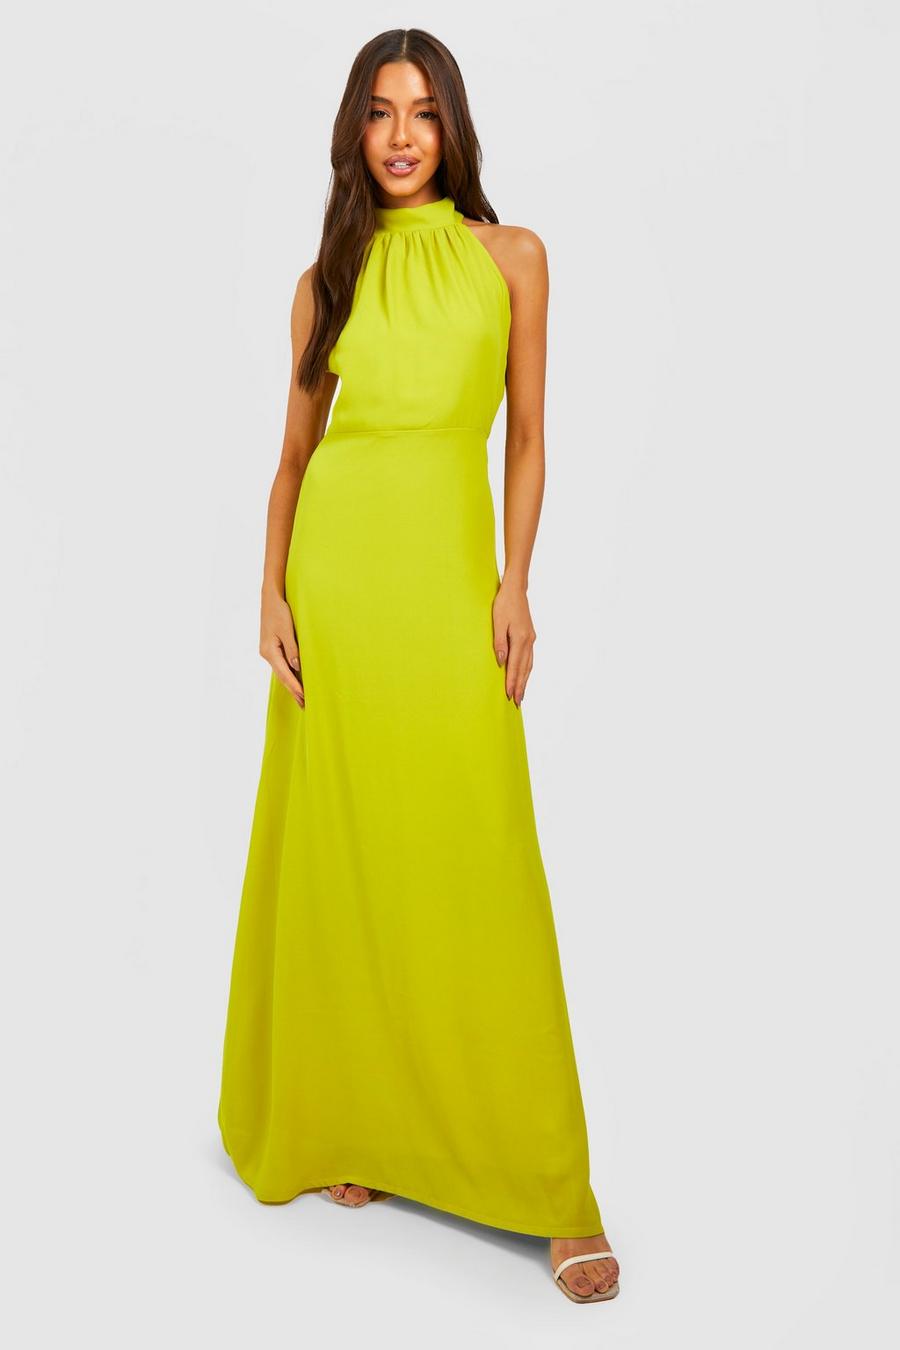 Chartreuse yellow Chiffon Halter Maxi Dress